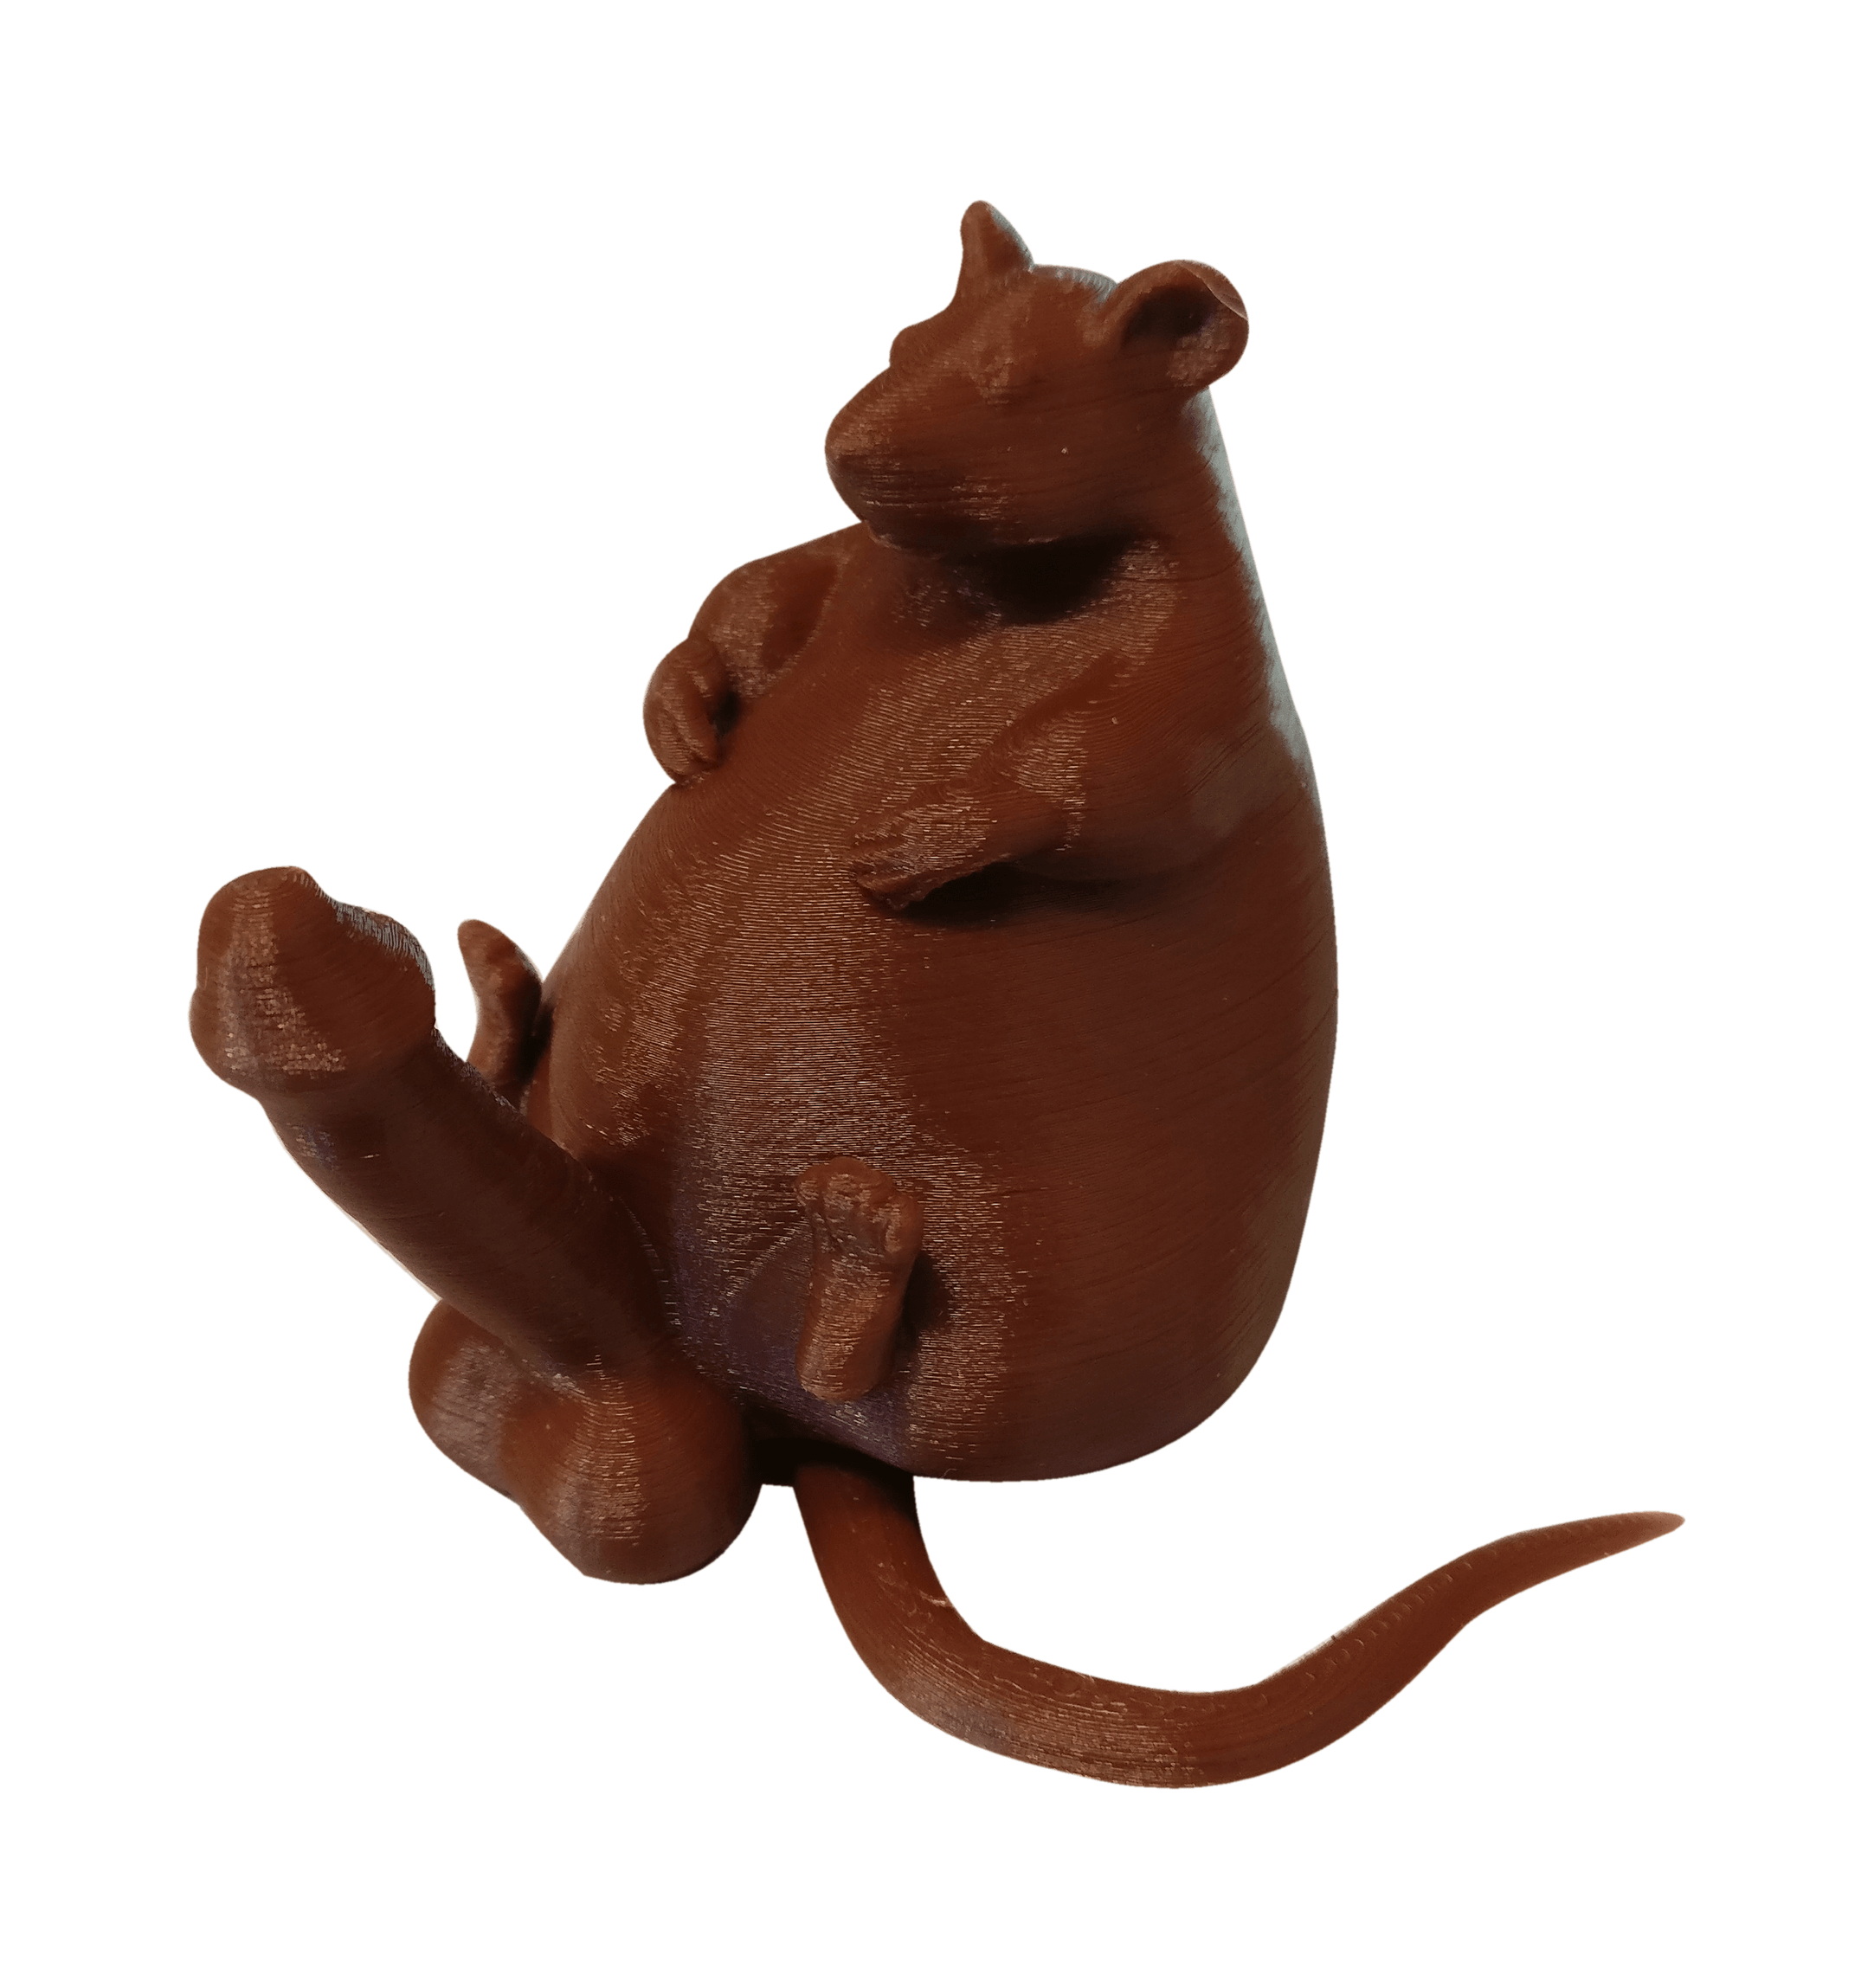 rat-bite.png Download free STL file The rat-bite by JMS • 3D printable object, Jean-Michel_Sinep